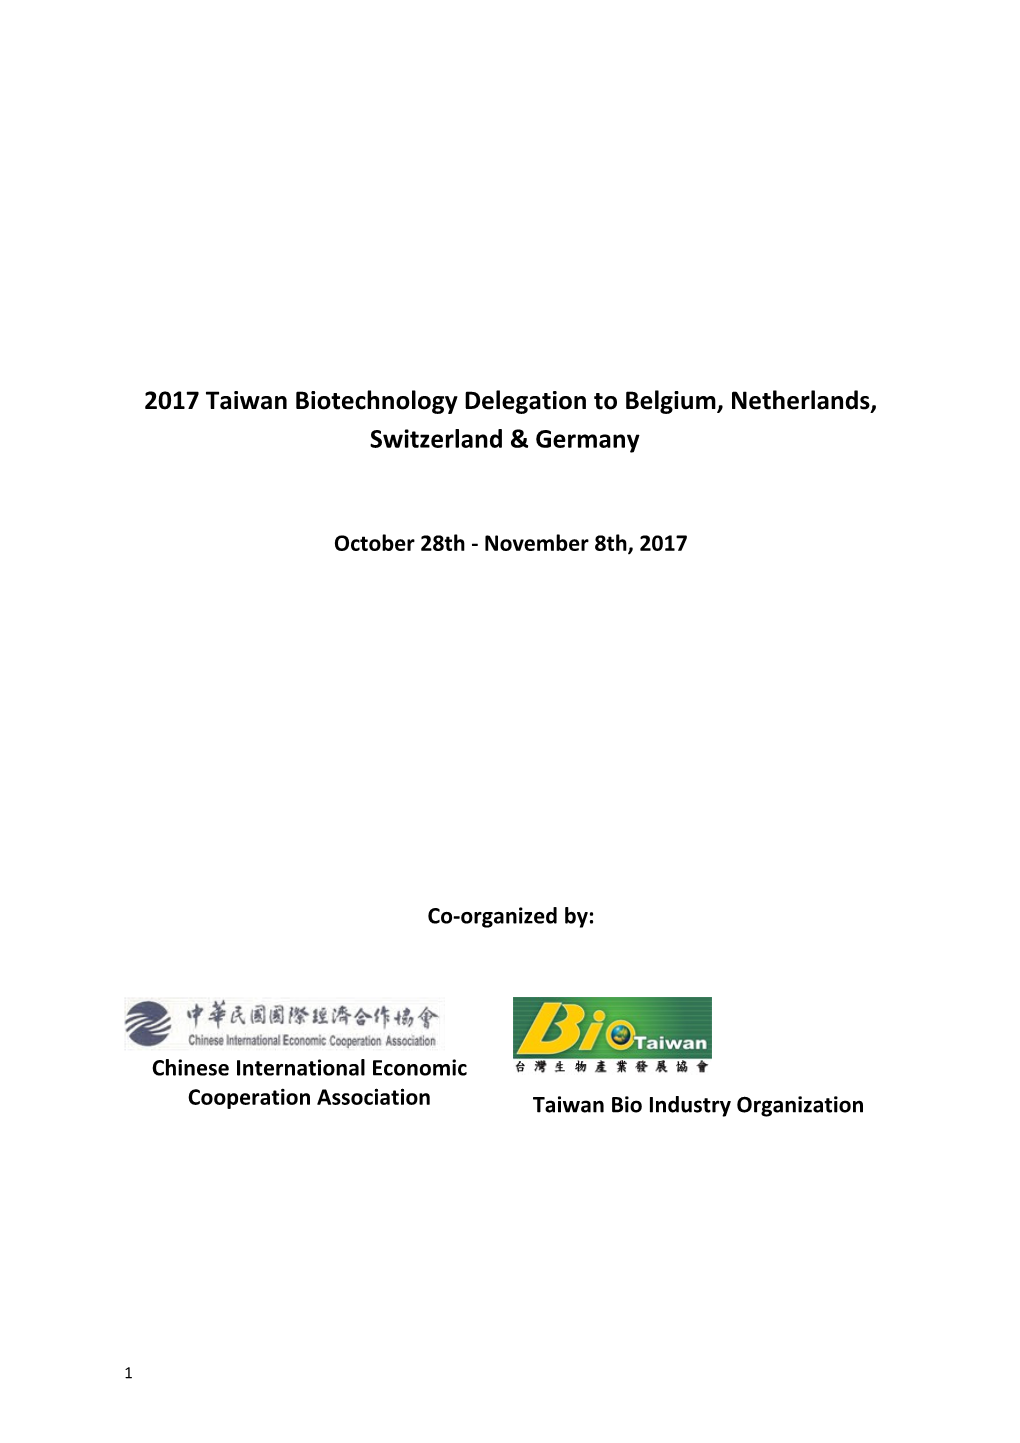 2017 Taiwan Biotechnology Delegation to Belgium, Netherlands, Switzerland & Germany